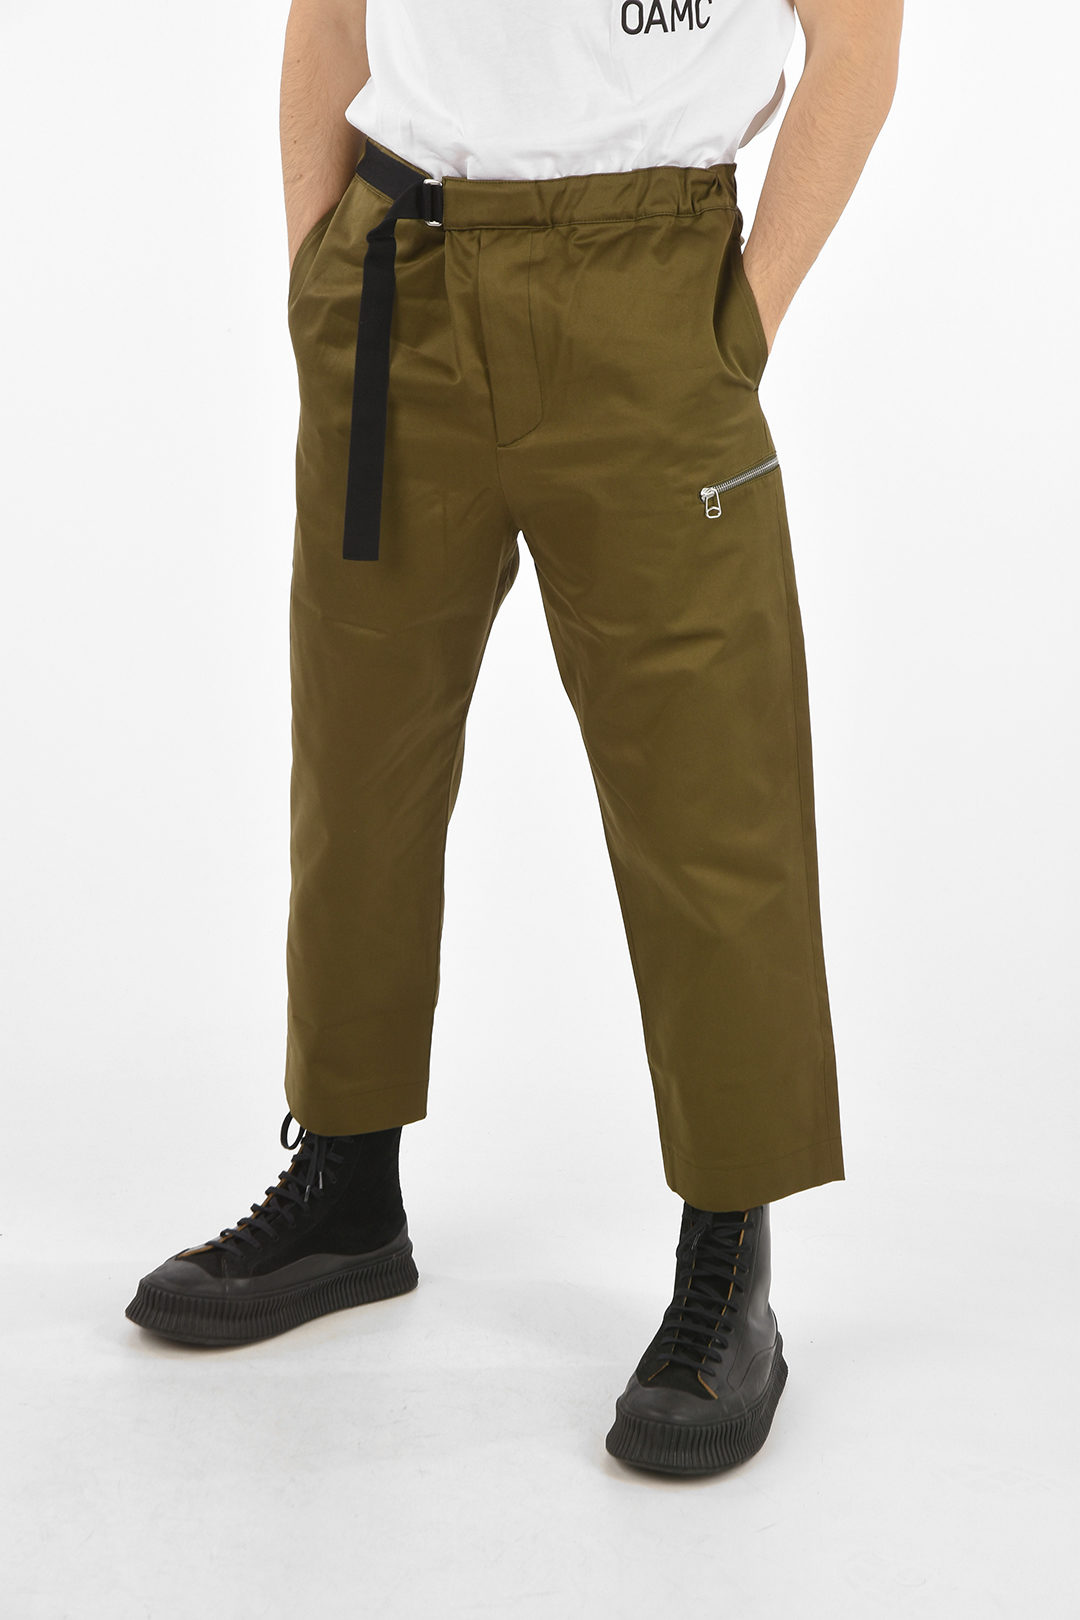 Dsquared2 Low-Waist Jetted Pocket CIGARETTE FIT Pants men - Glamood Outlet